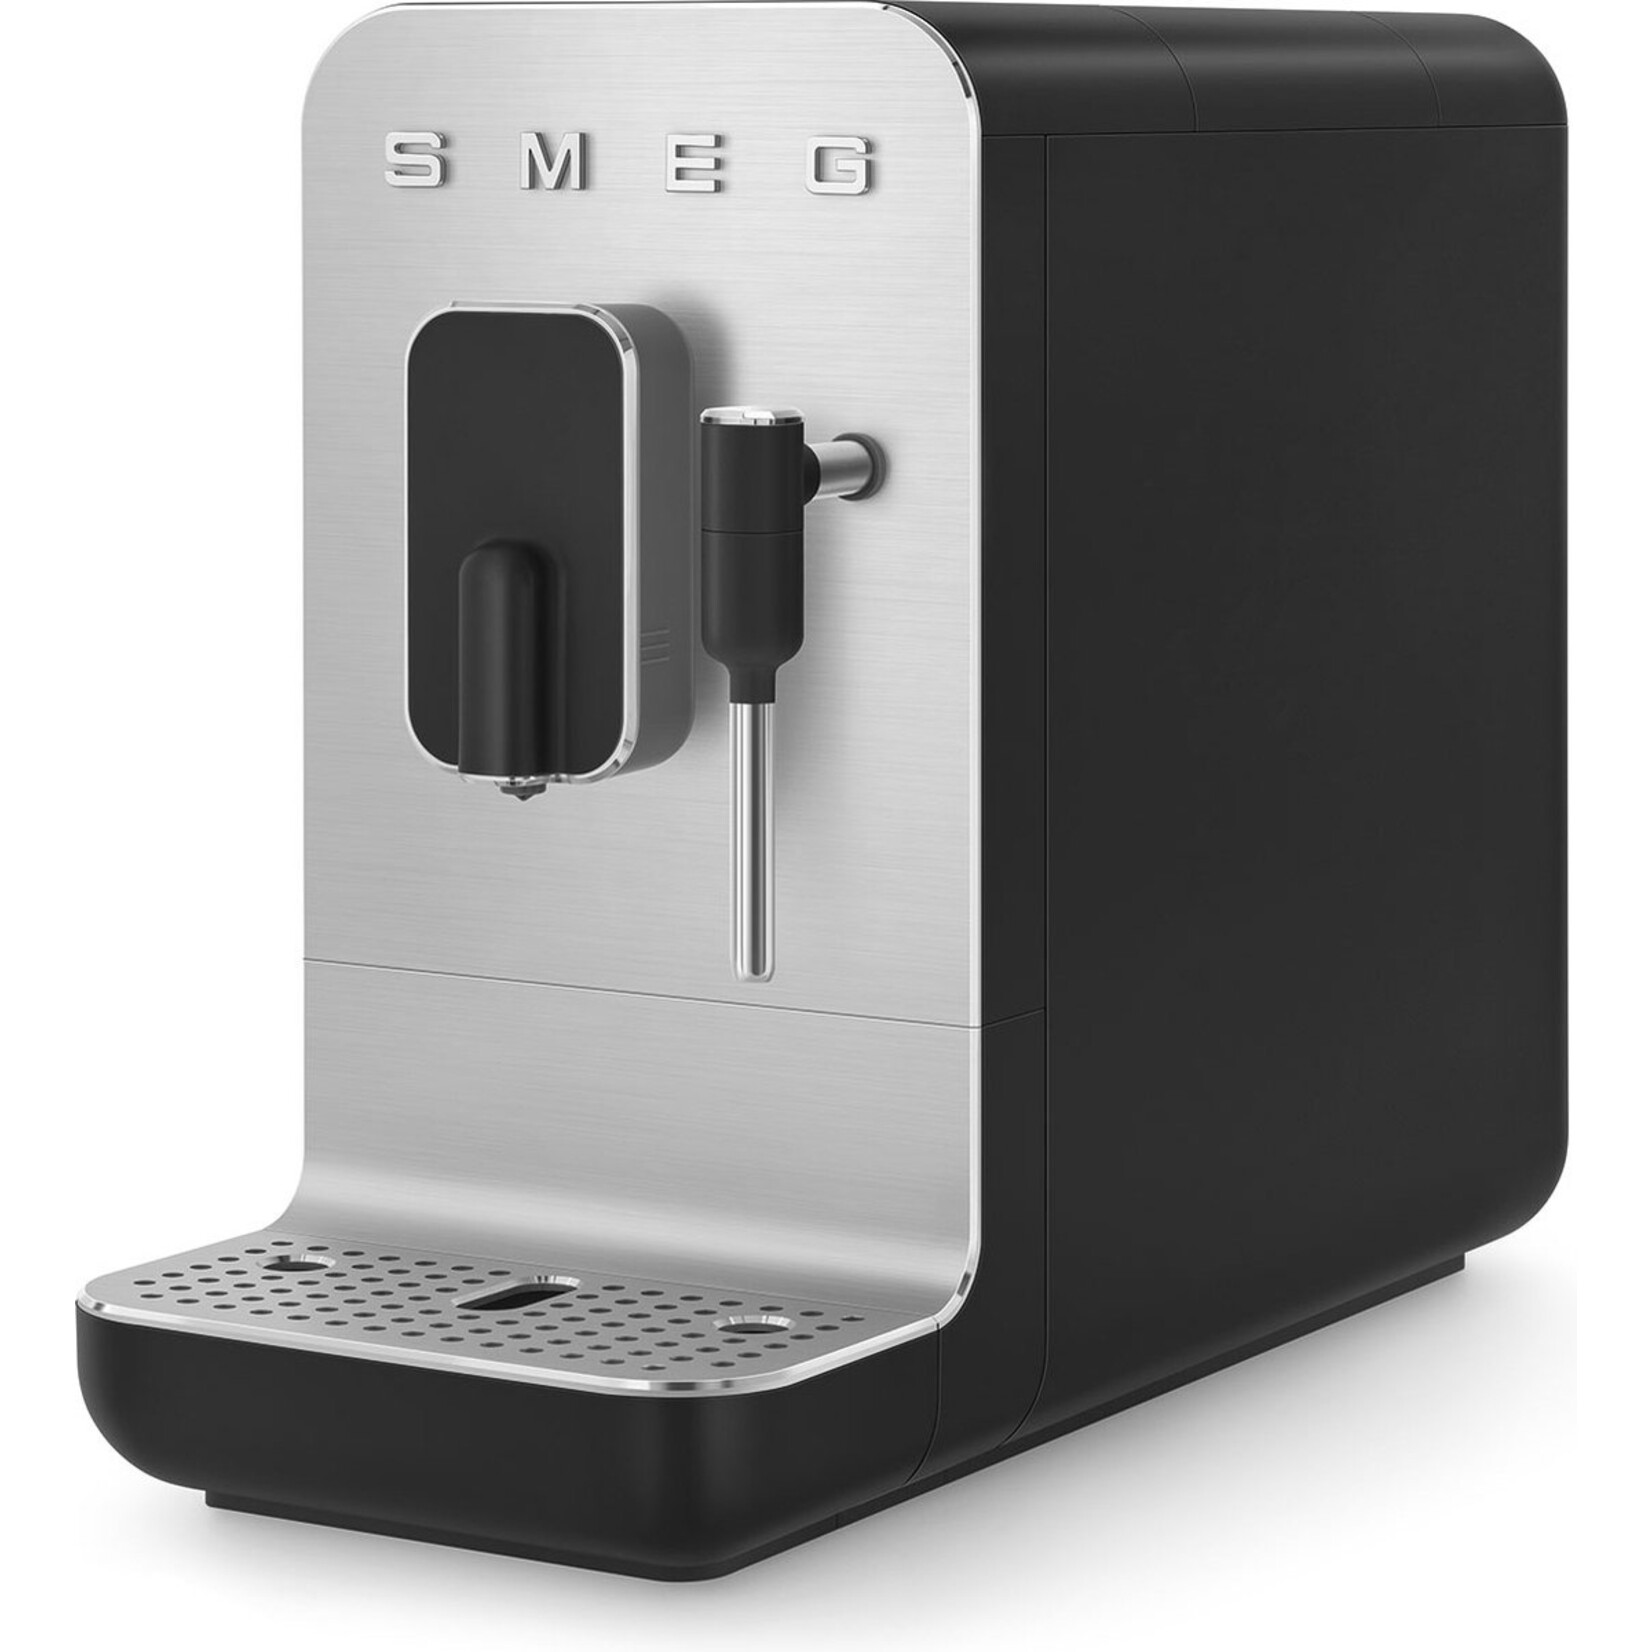 SMEG SMEG espressomachine medium, mat zwart, met stoomfunctie, BCC12BLMEU